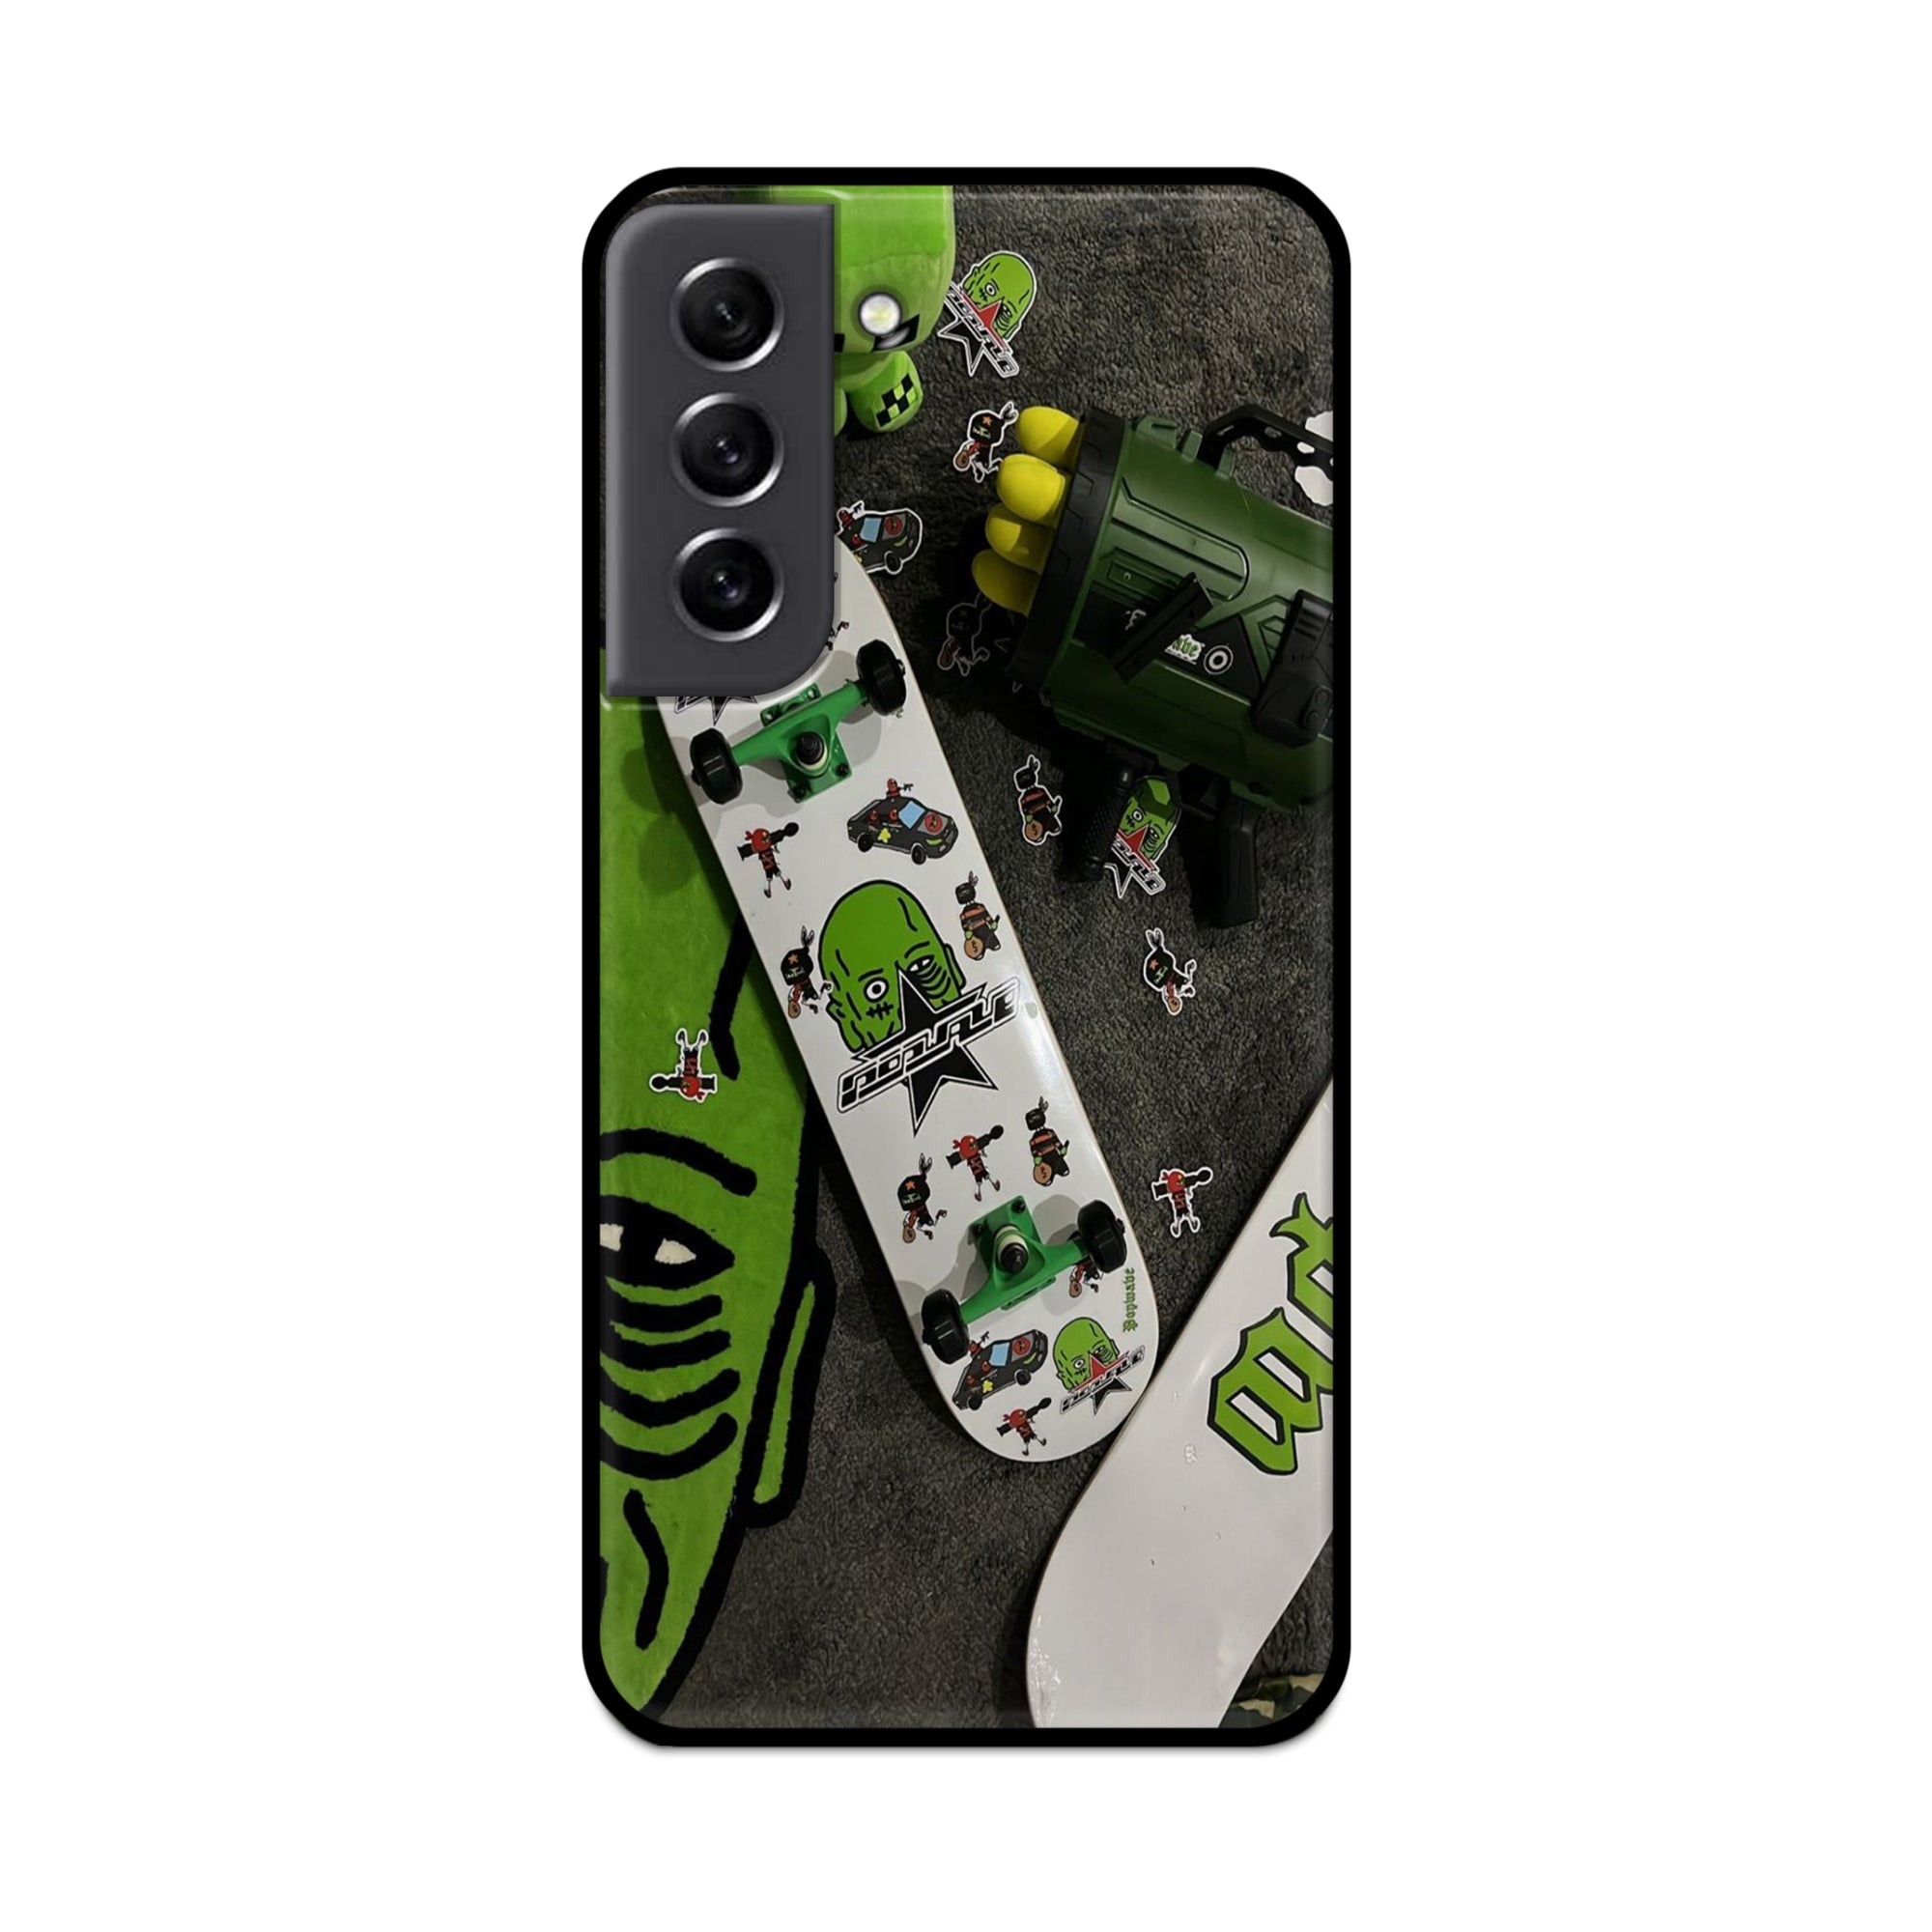 Buy Hulk Skateboard Metal-Silicon Back Mobile Phone Case/Cover For Samsung S21 FE Online